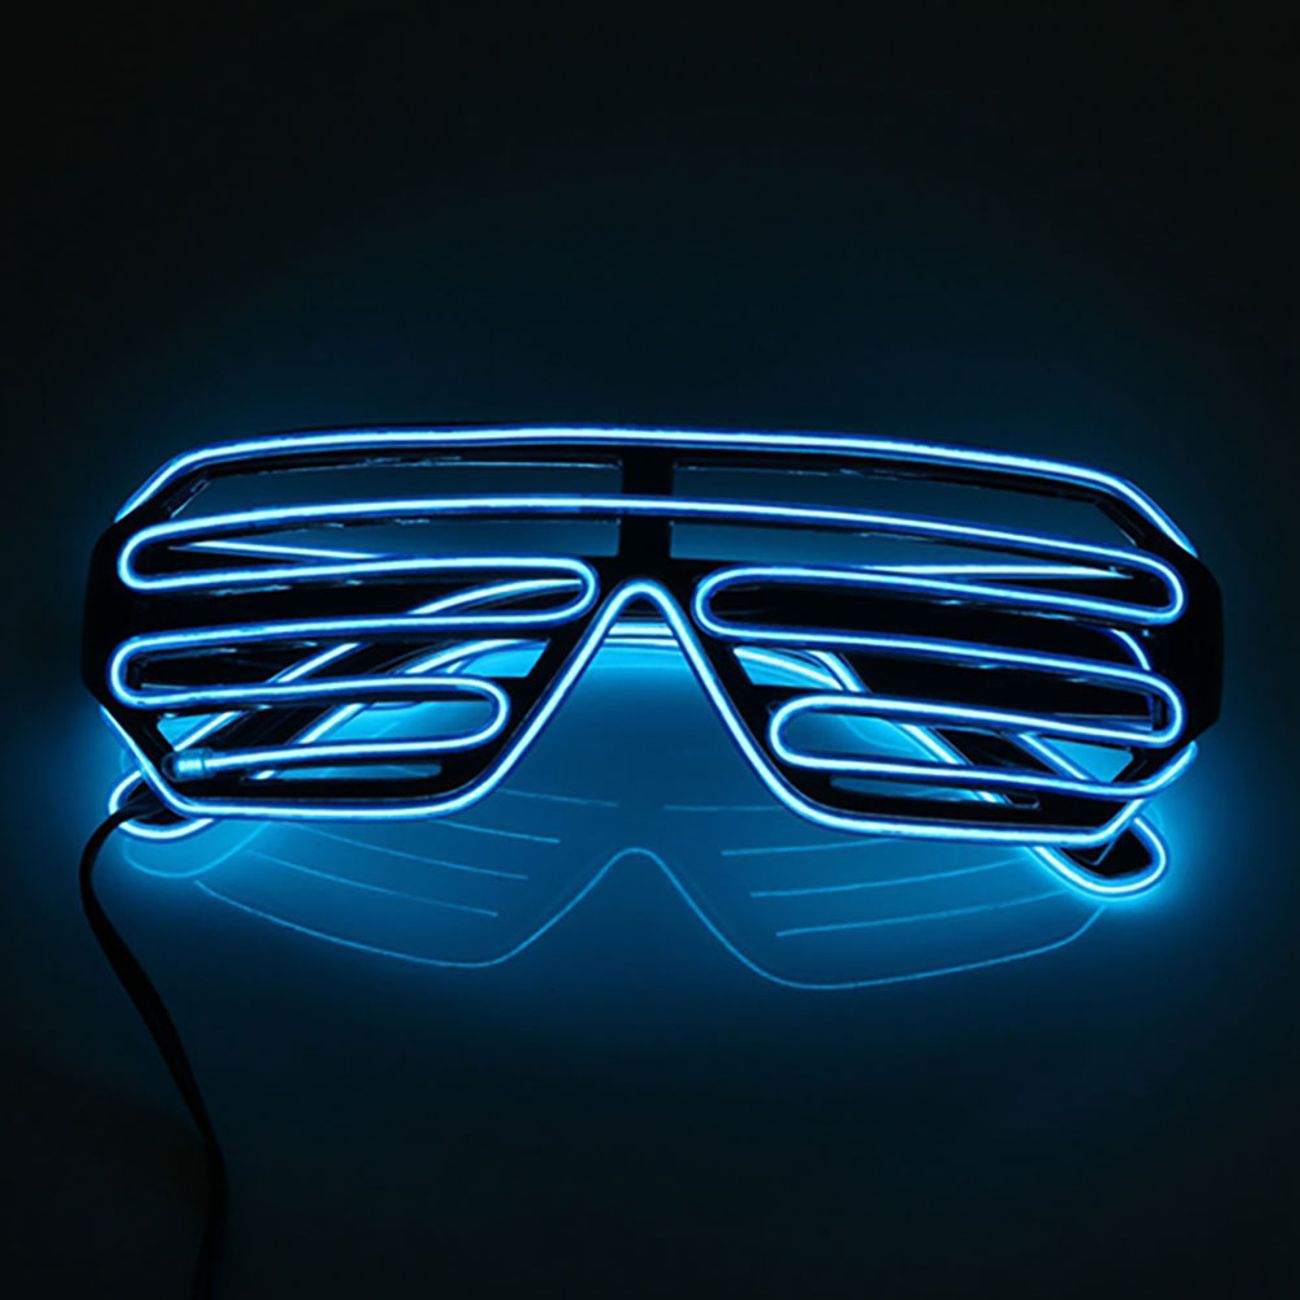 el-wire-single-color-glasses-blue-82754-2